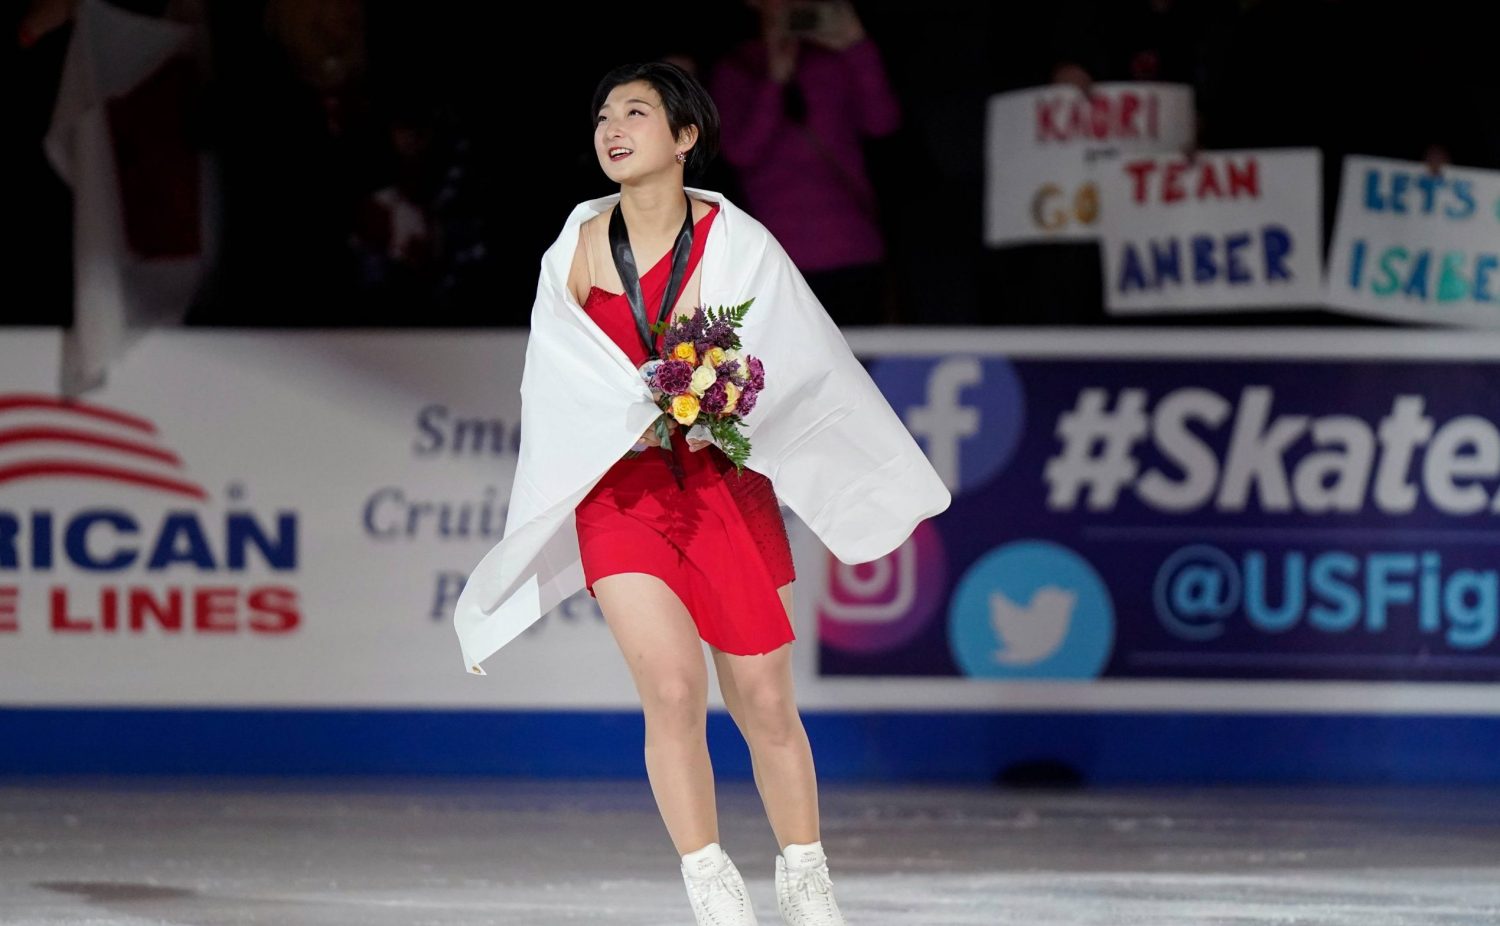 ICE TIME] World Champion Kaori Sakamoto Cruises to Victory at